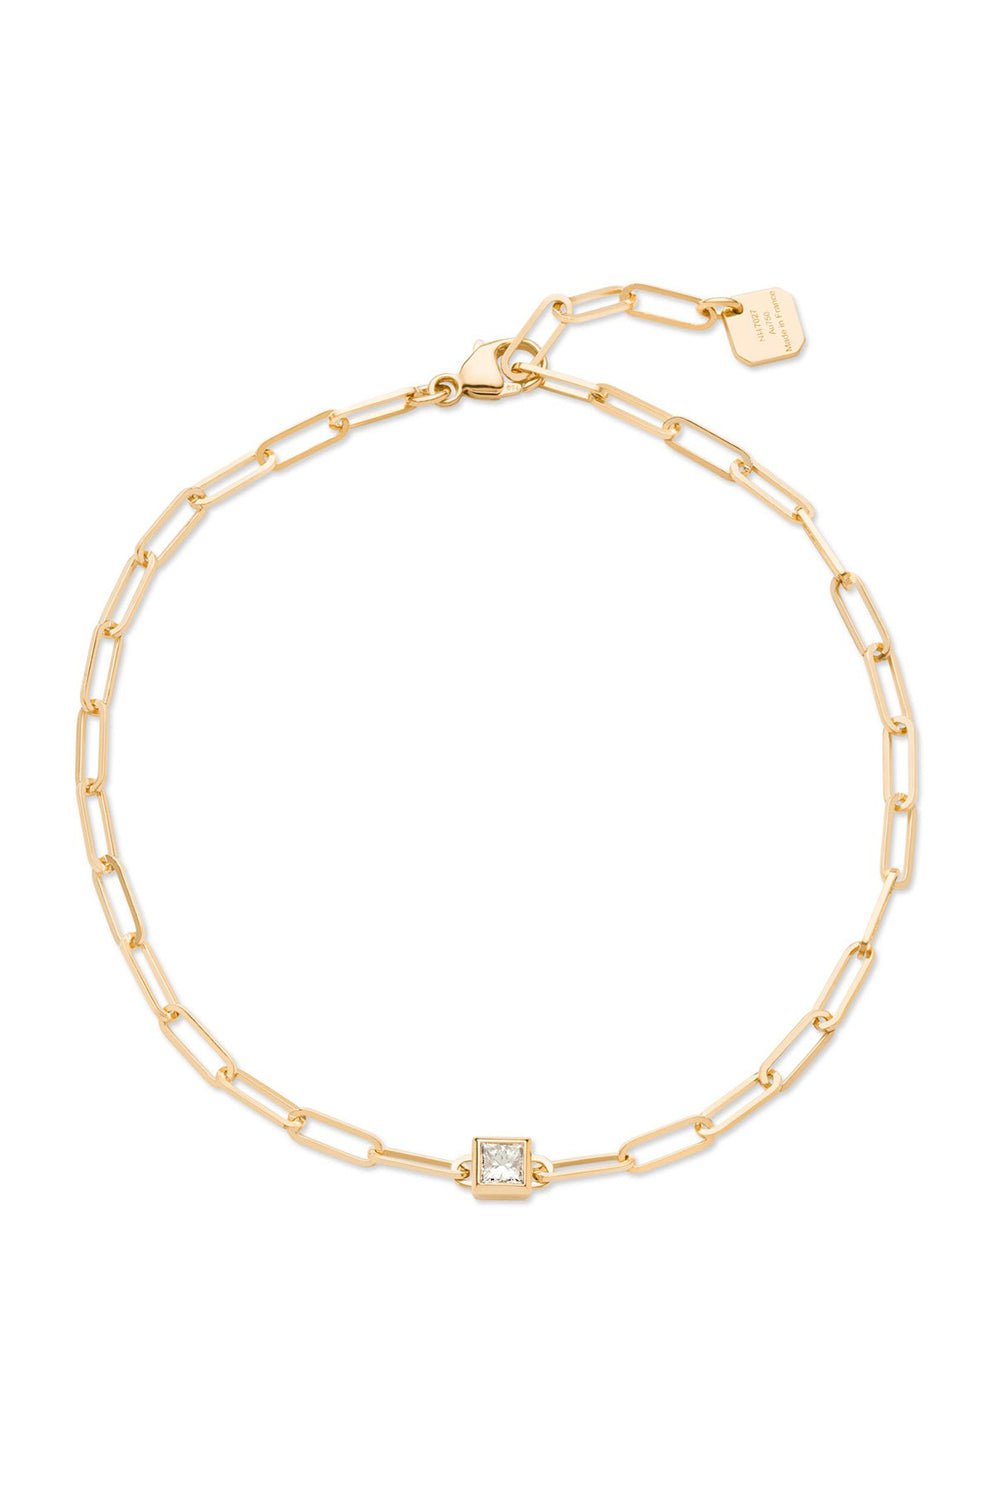 NOUVEL HERITAGE-Princess Classics Bracelet-YELLOW GOLD